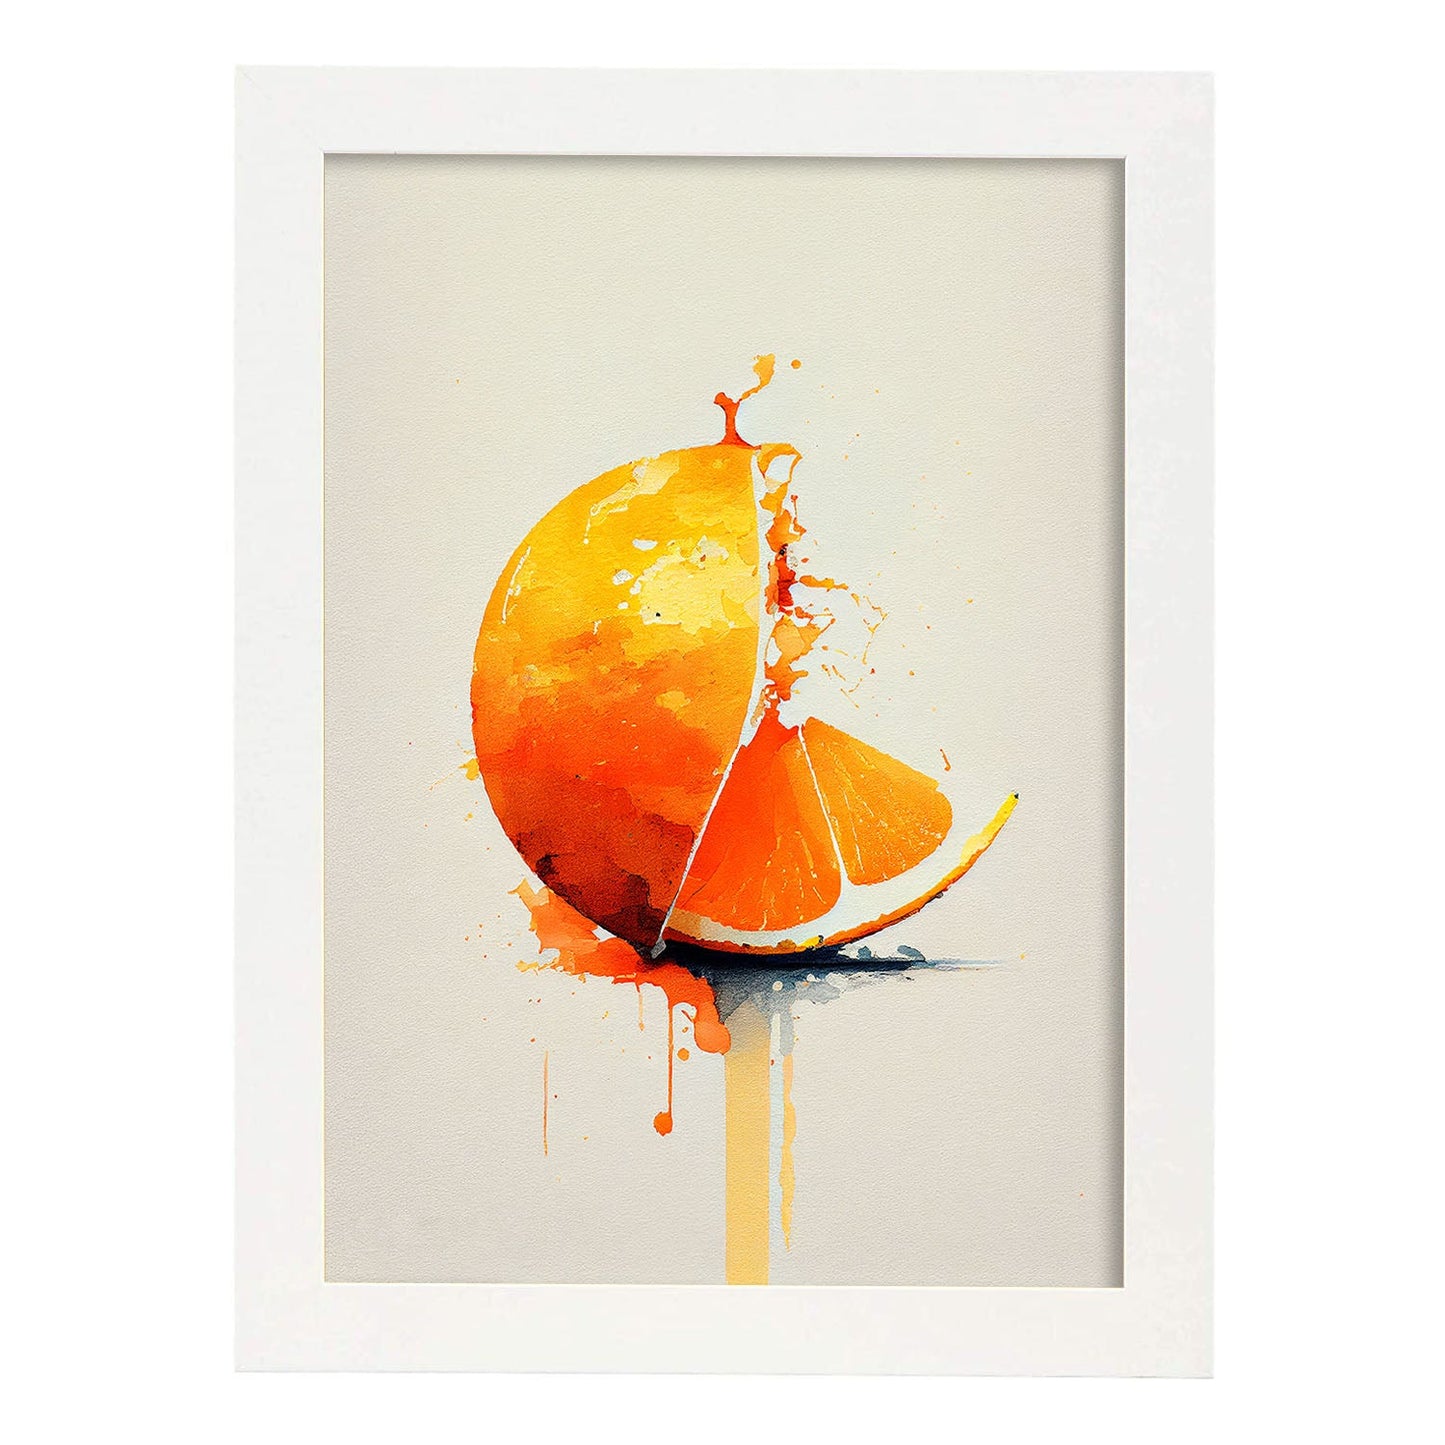 Nacnic minimalist Orange_1. Aesthetic Wall Art Prints for Bedroom or Living Room Design.-Artwork-Nacnic-A4-Marco Blanco-Nacnic Estudio SL